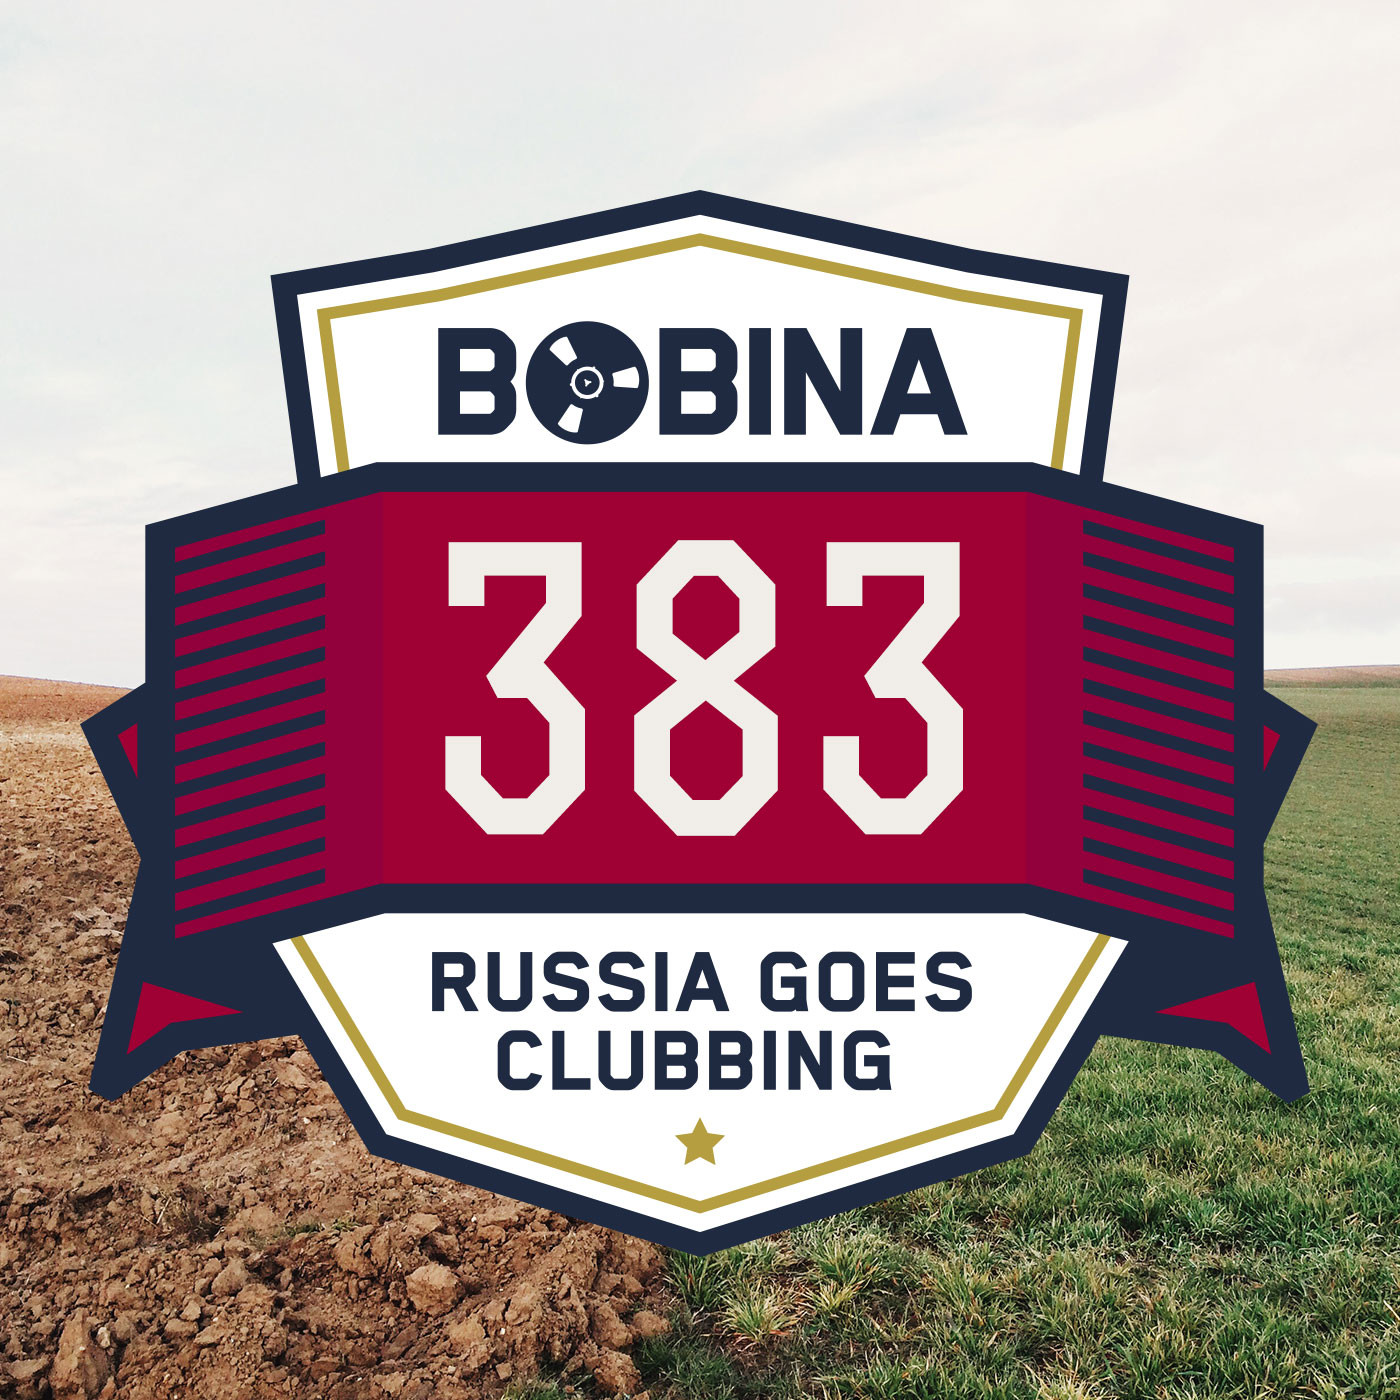 Nr. 383 Russia Goes Clubbing (Rus)